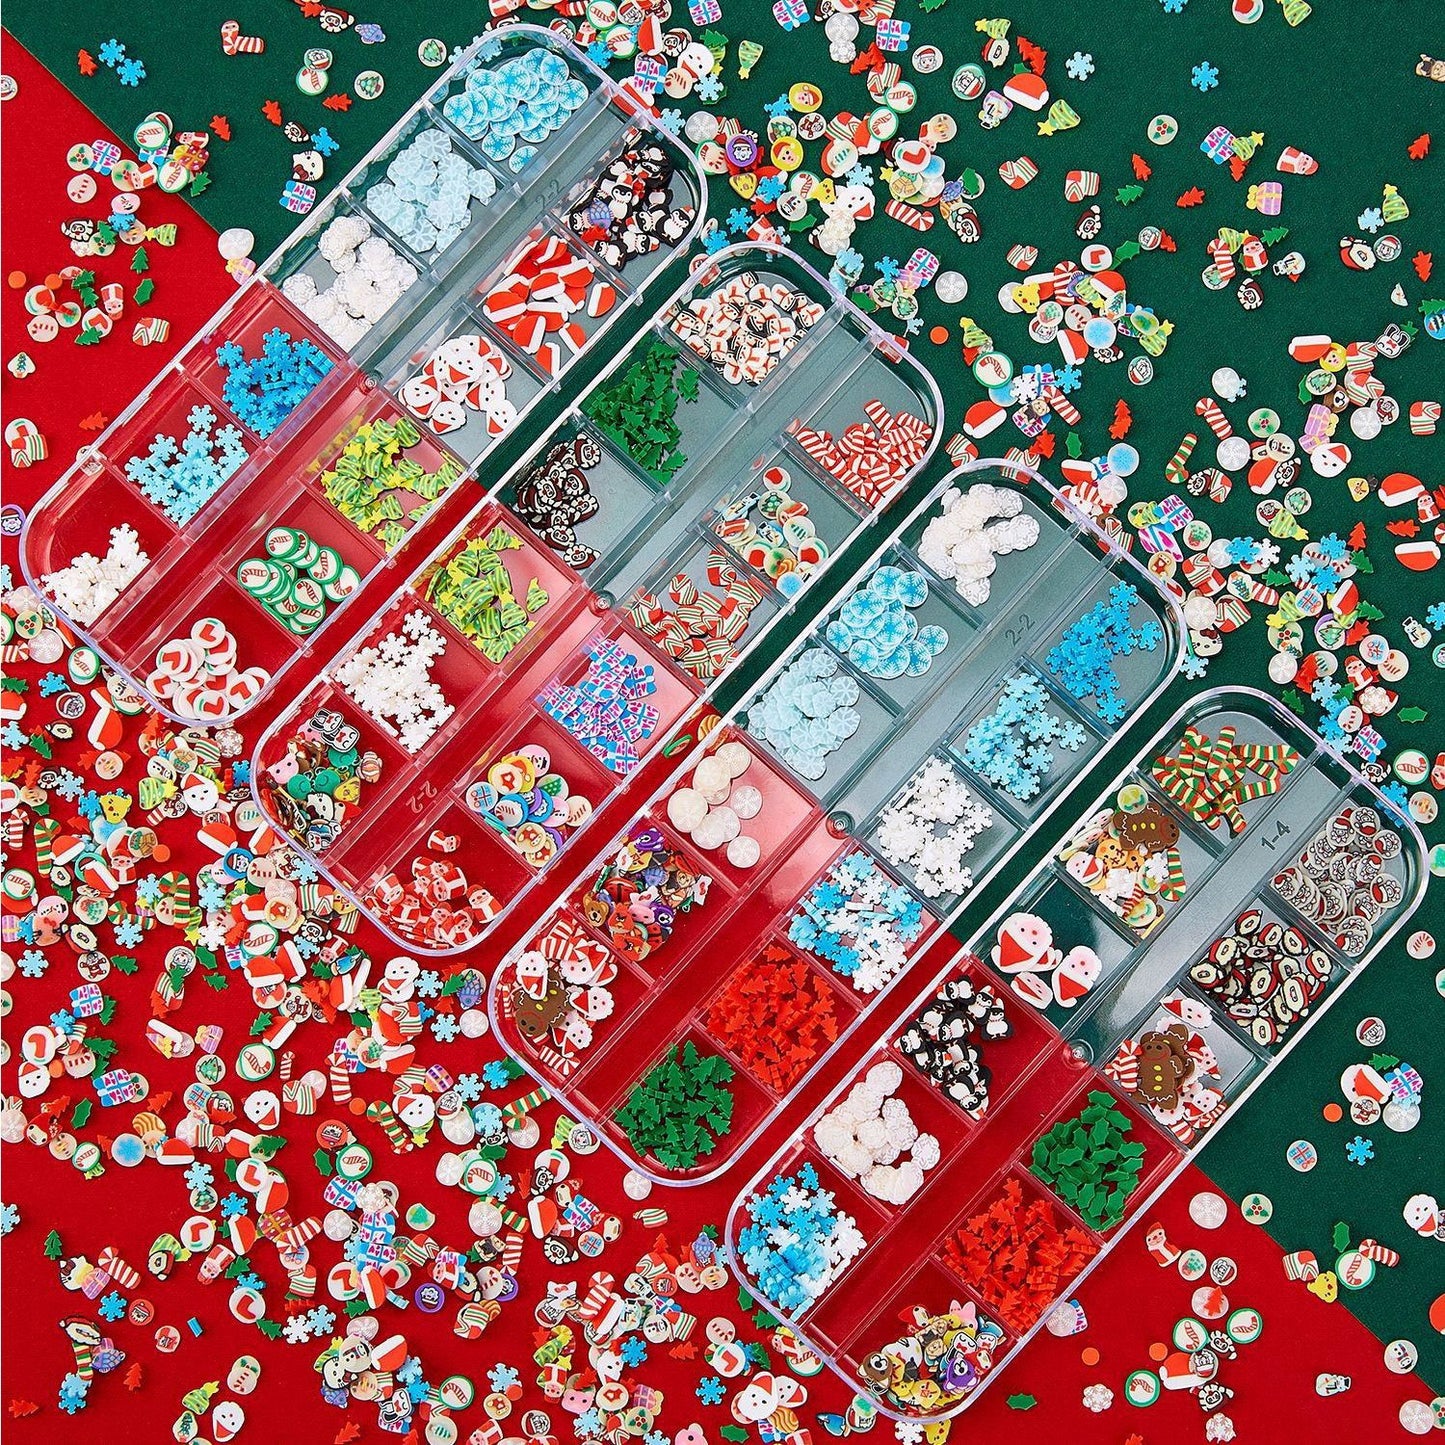 【Christmas Slices Series】Snowflake Santa Claus tree nail accessories nail stickers glitter powder